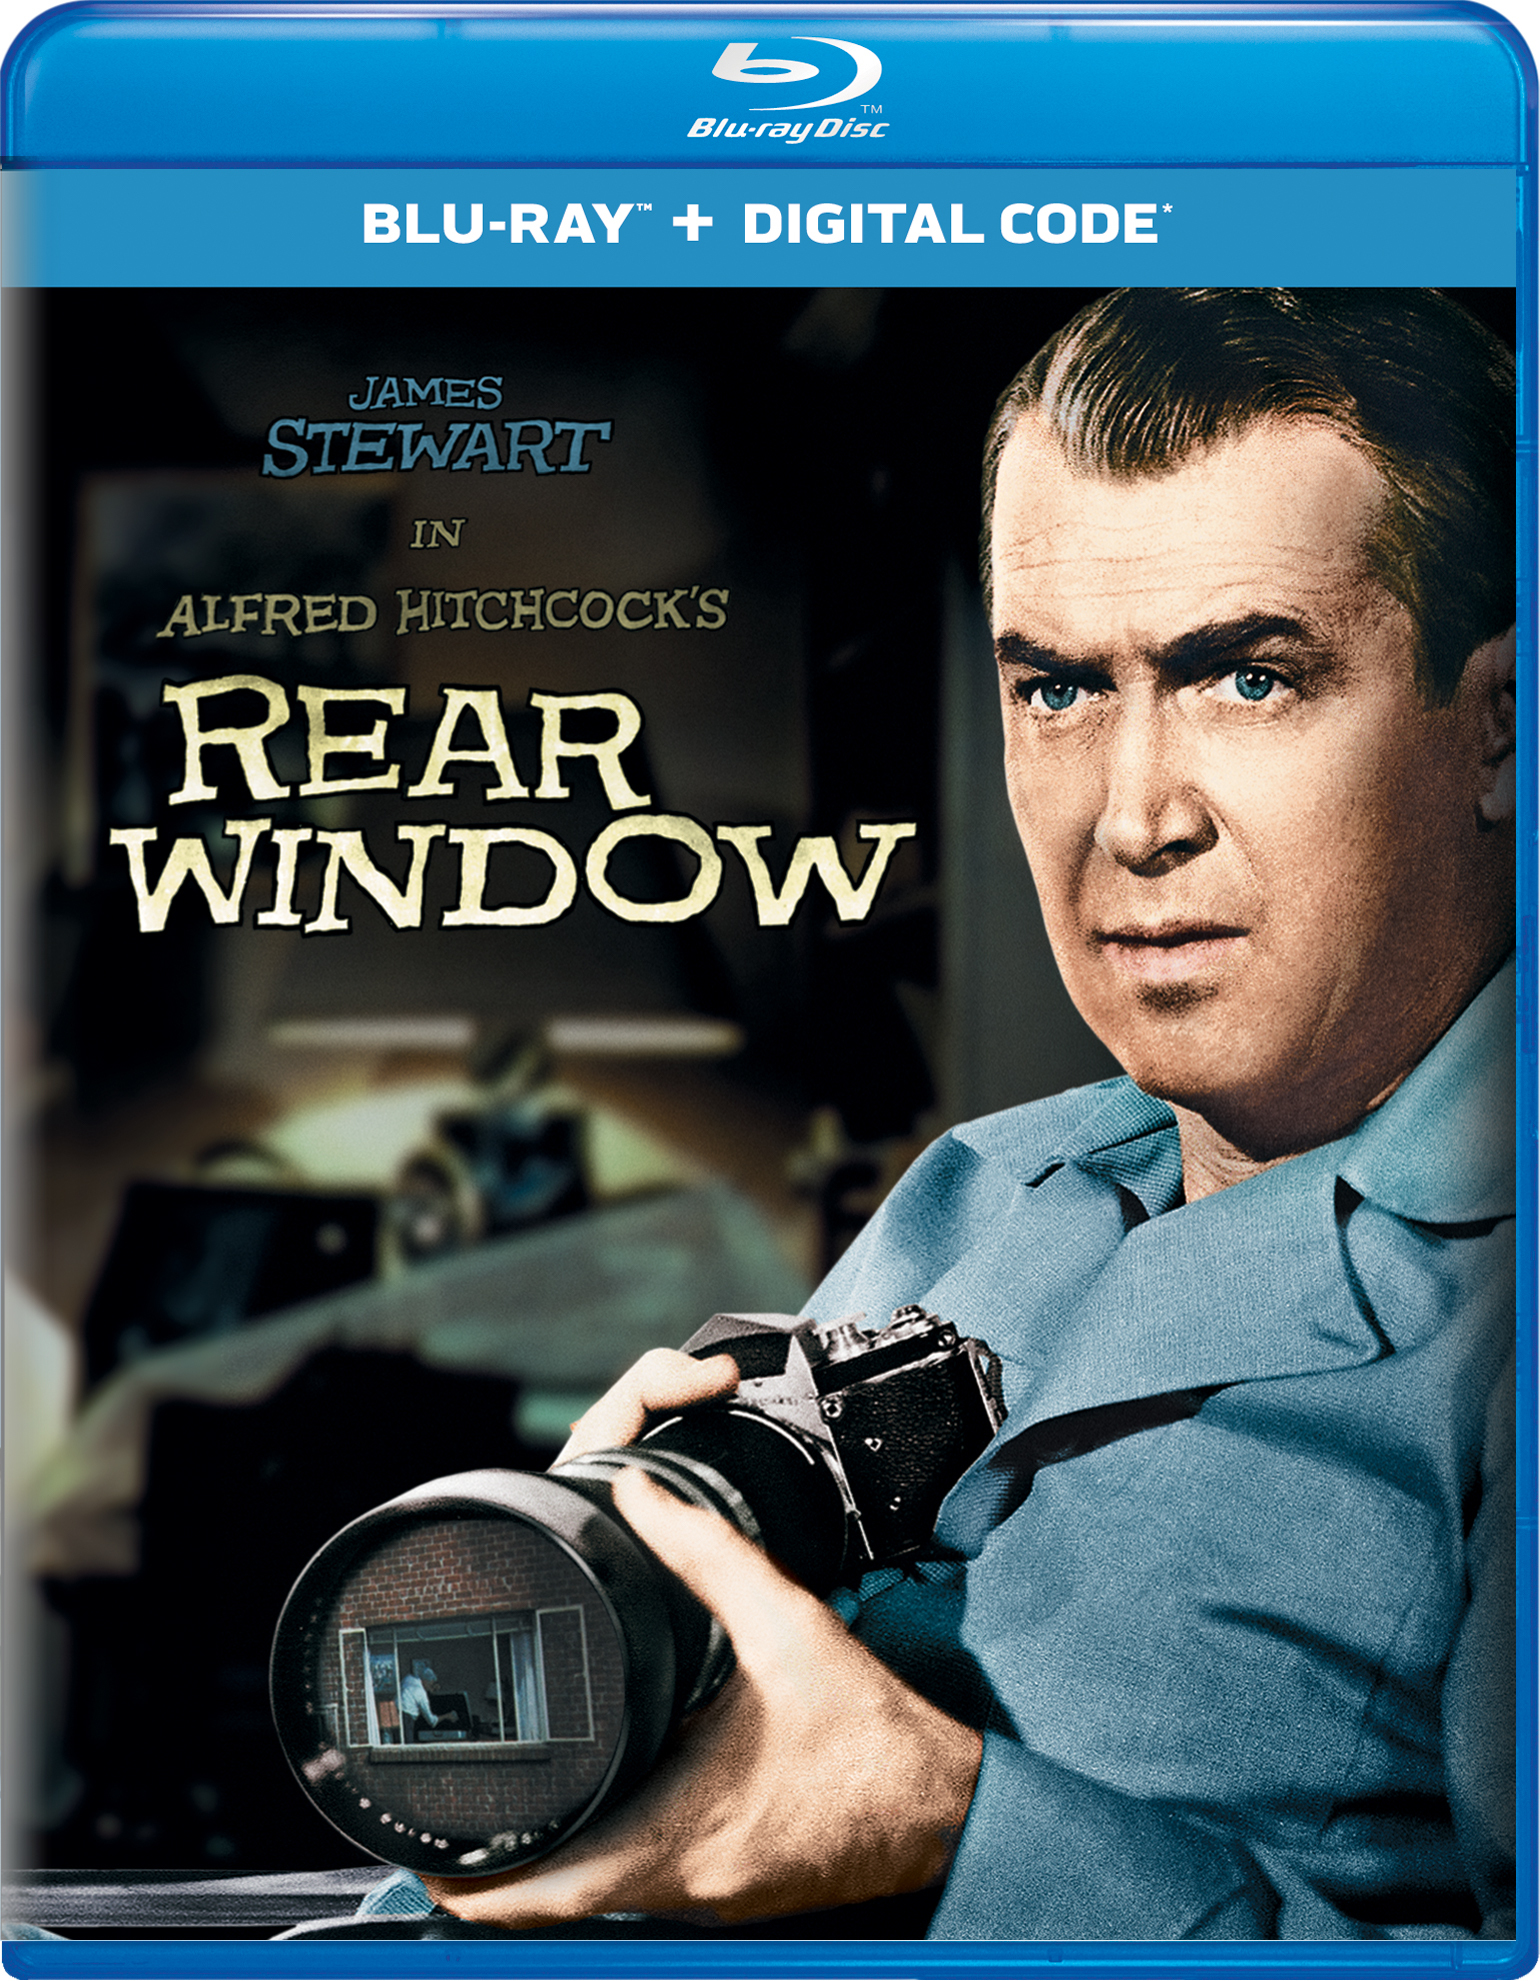 Rear Window (Blu-ray + Digital Copy) - Blu-ray [ 1954 ]  - Modern Classic Movies On Blu-ray - Movies On GRUV